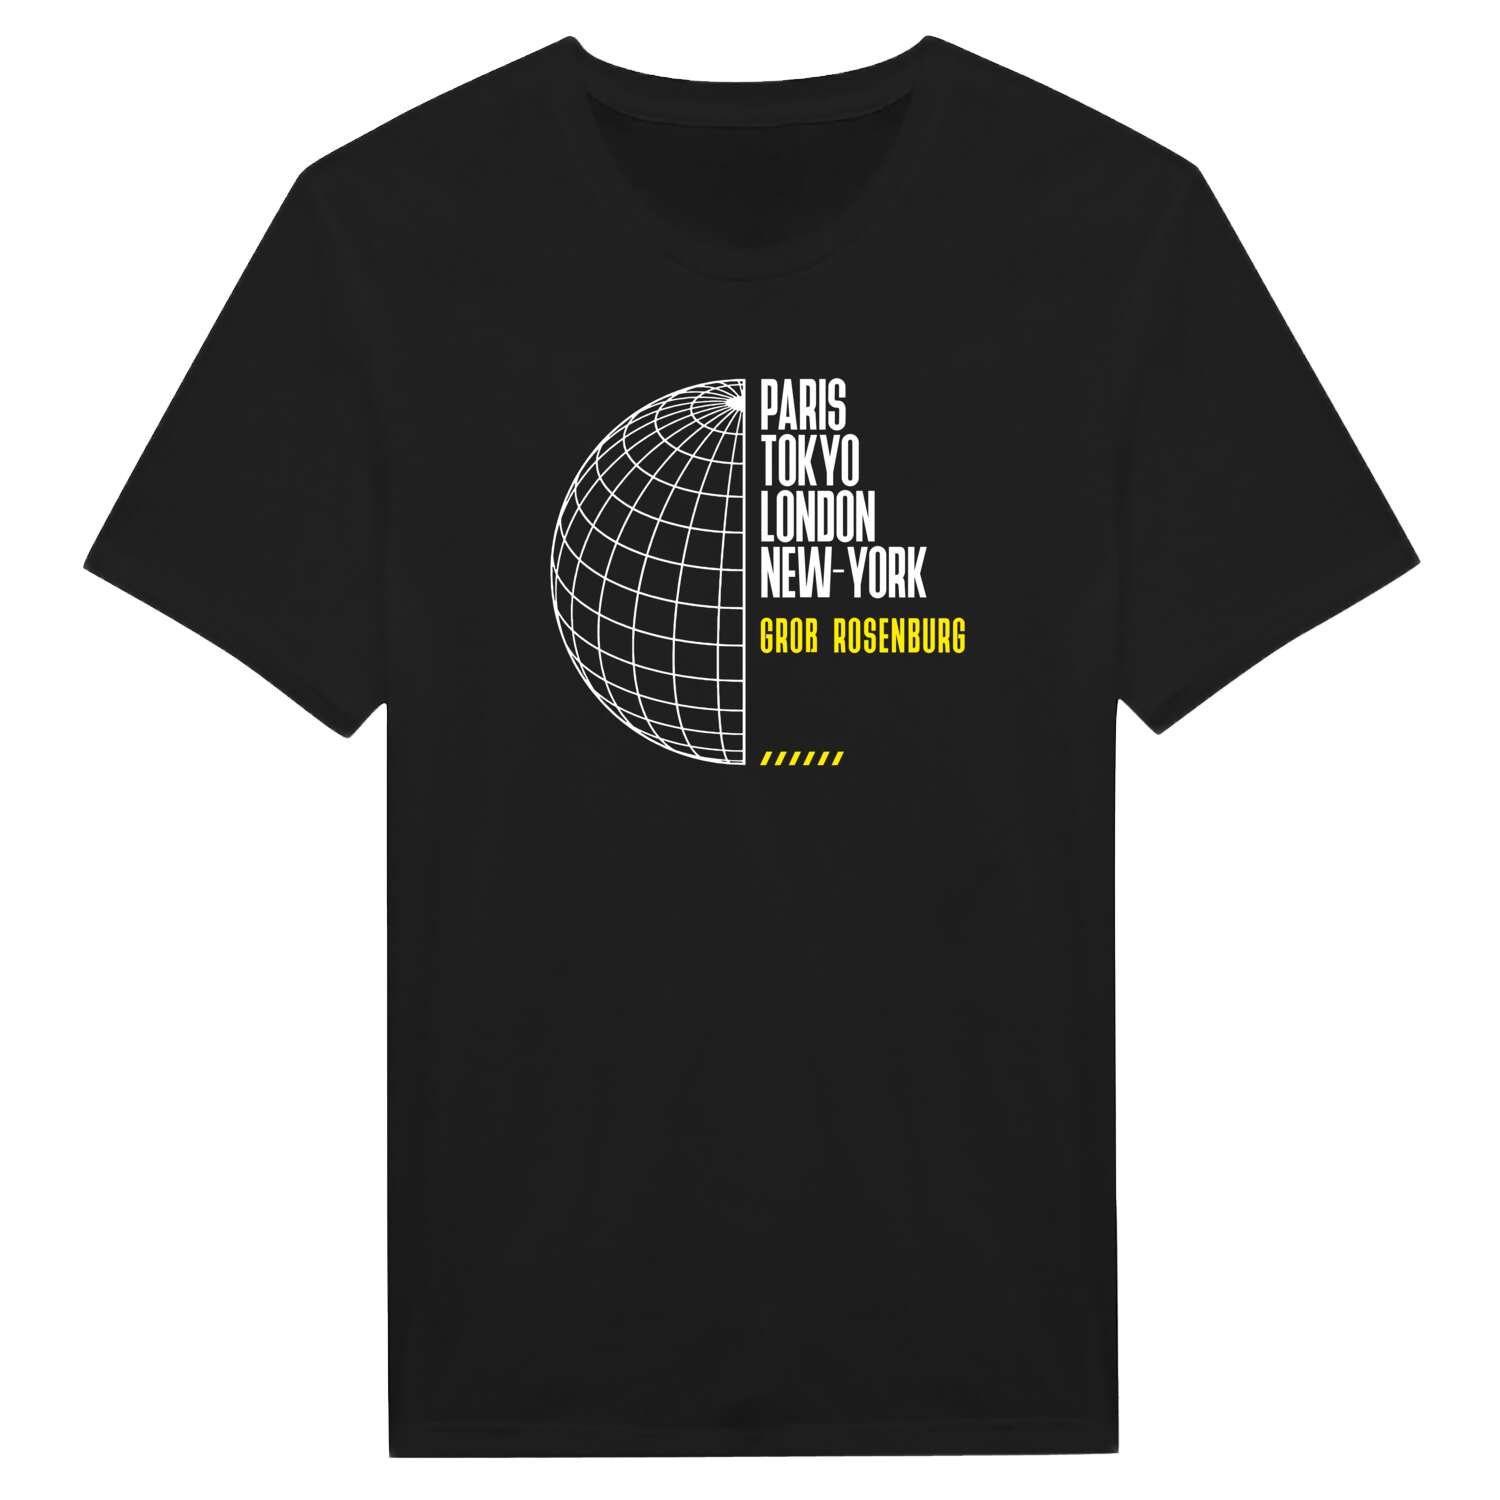 Groß Rosenburg T-Shirt »Paris Tokyo London«